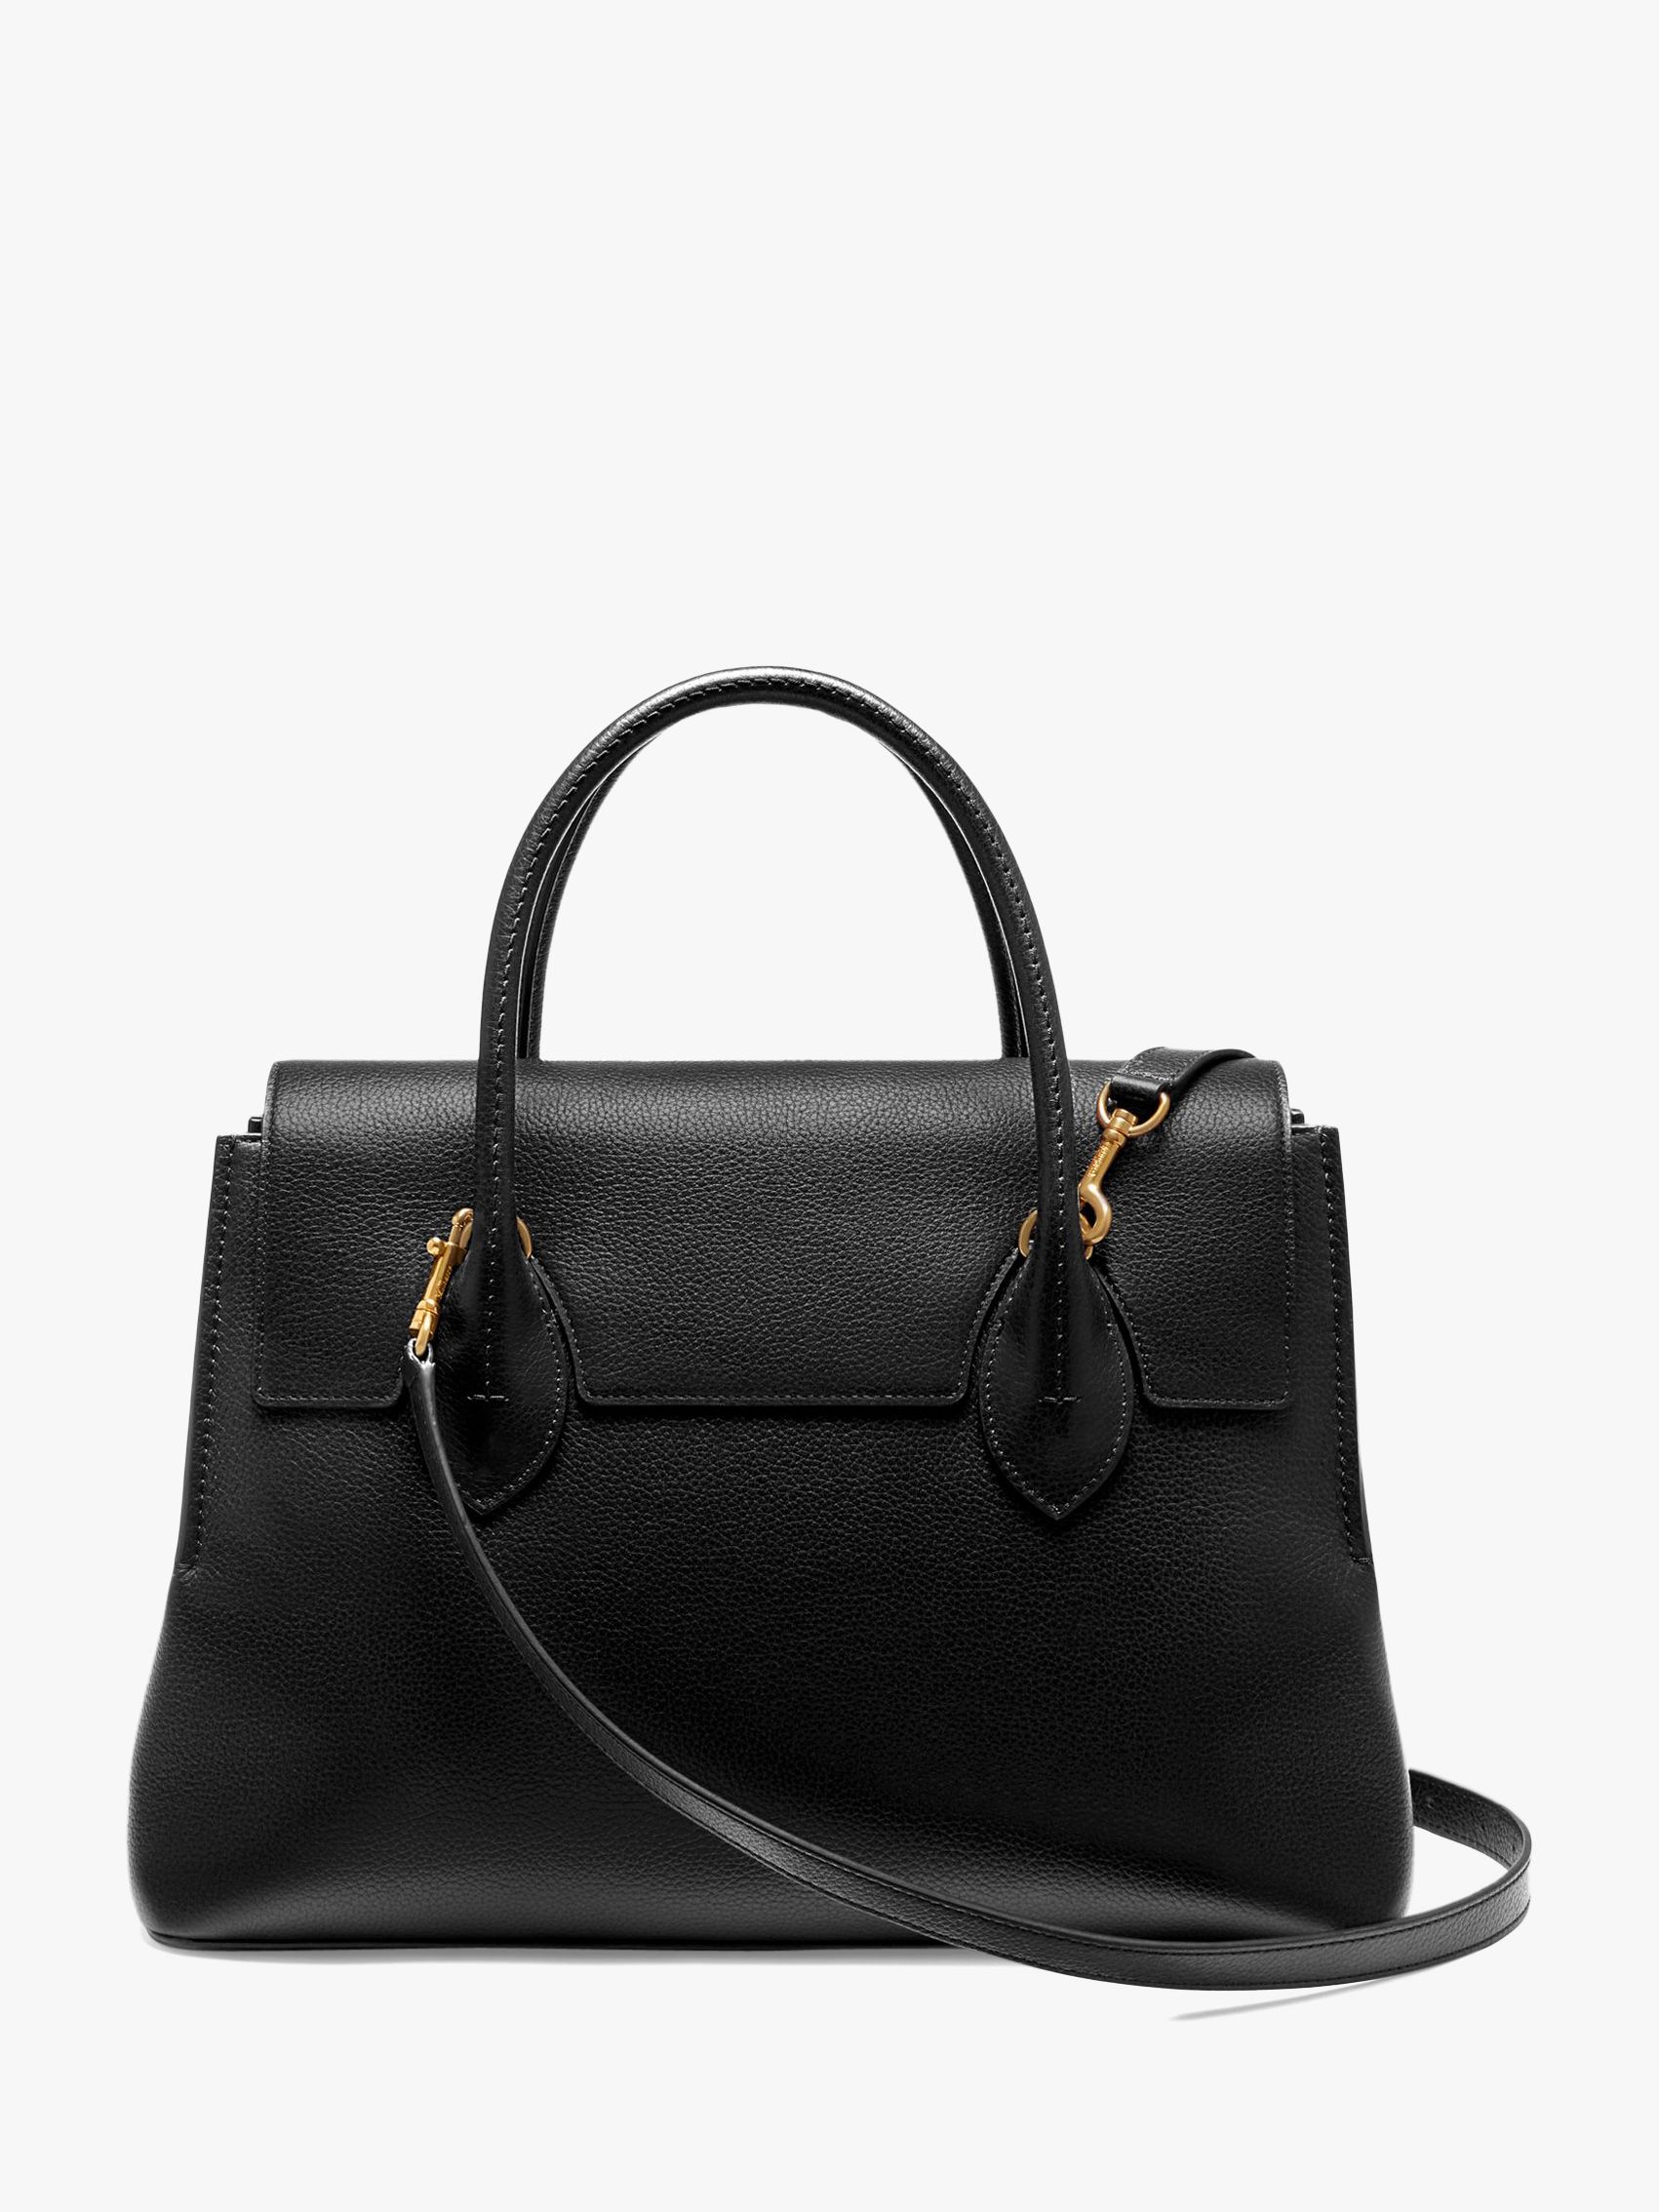 Mulberry Seaton Classic Grain Leather Handbag, Black